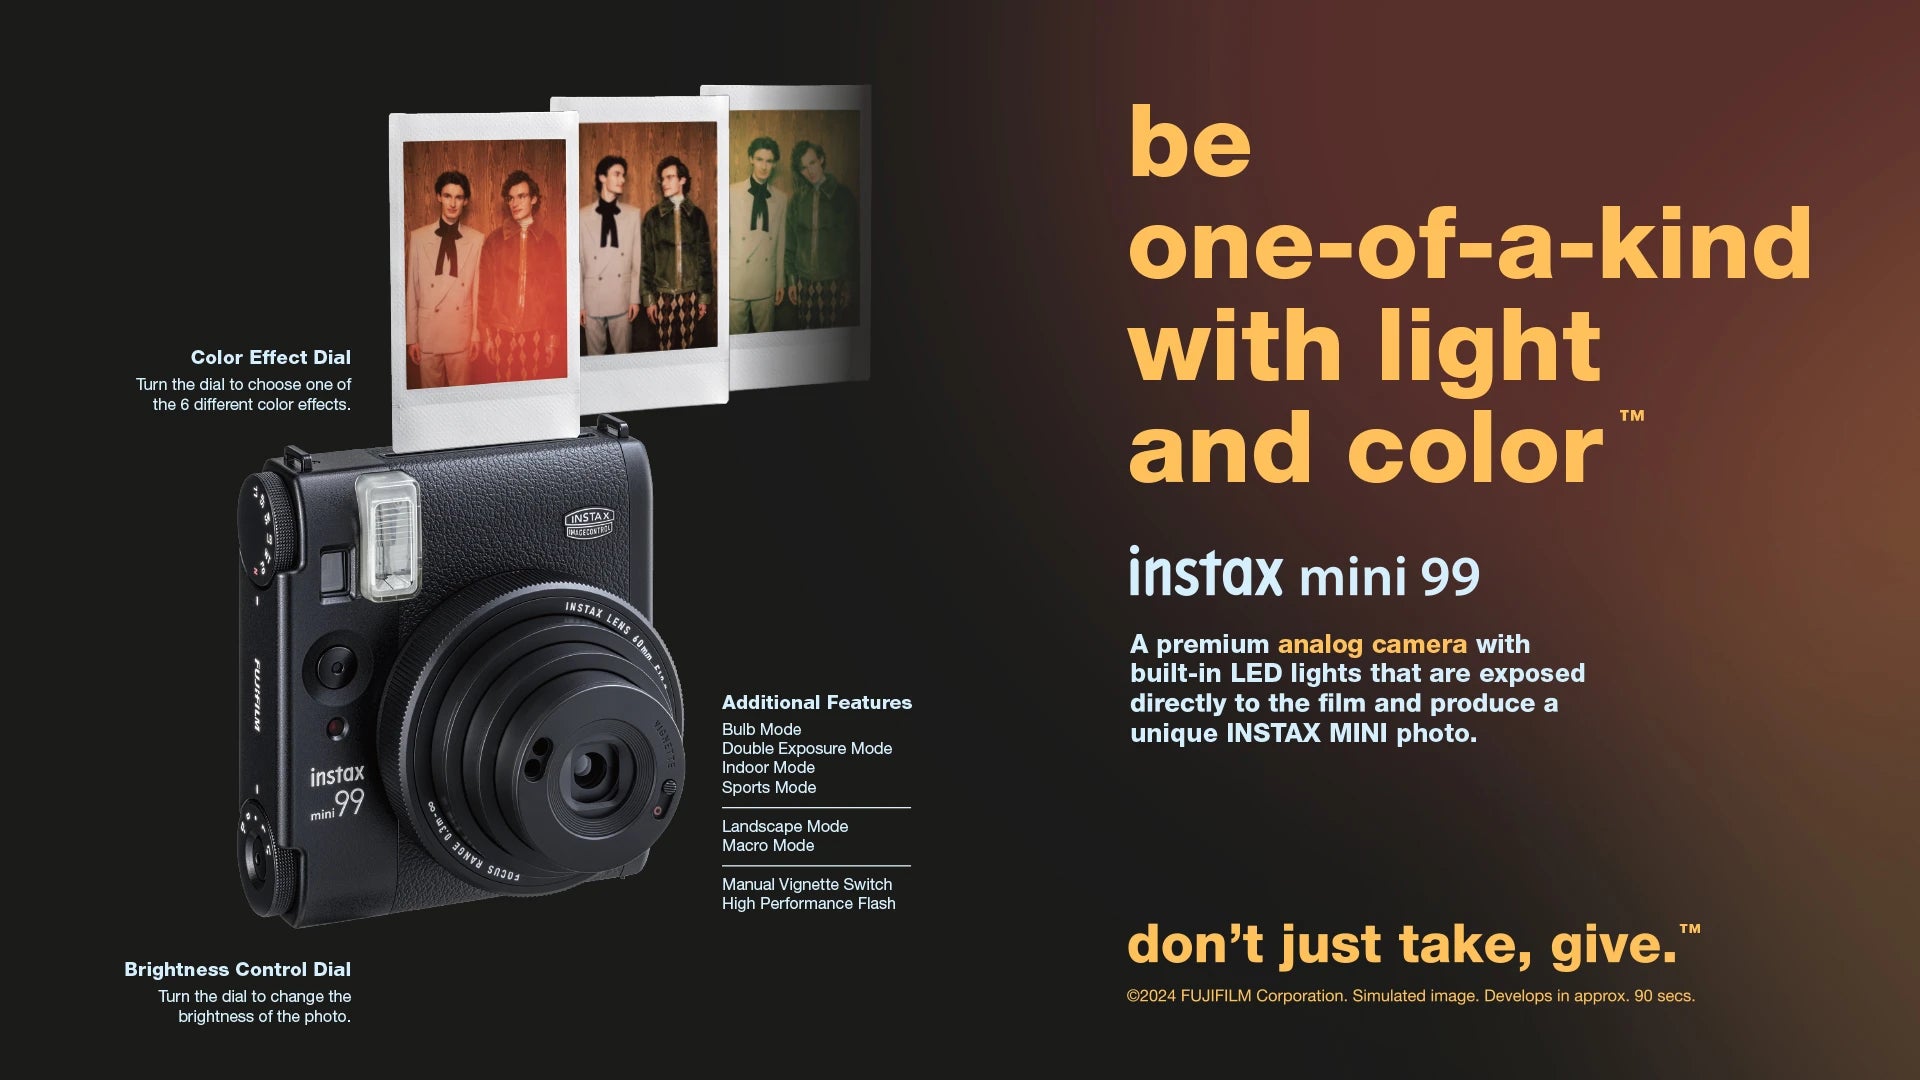 Instax Mini 99 - A Premium Analog Camera